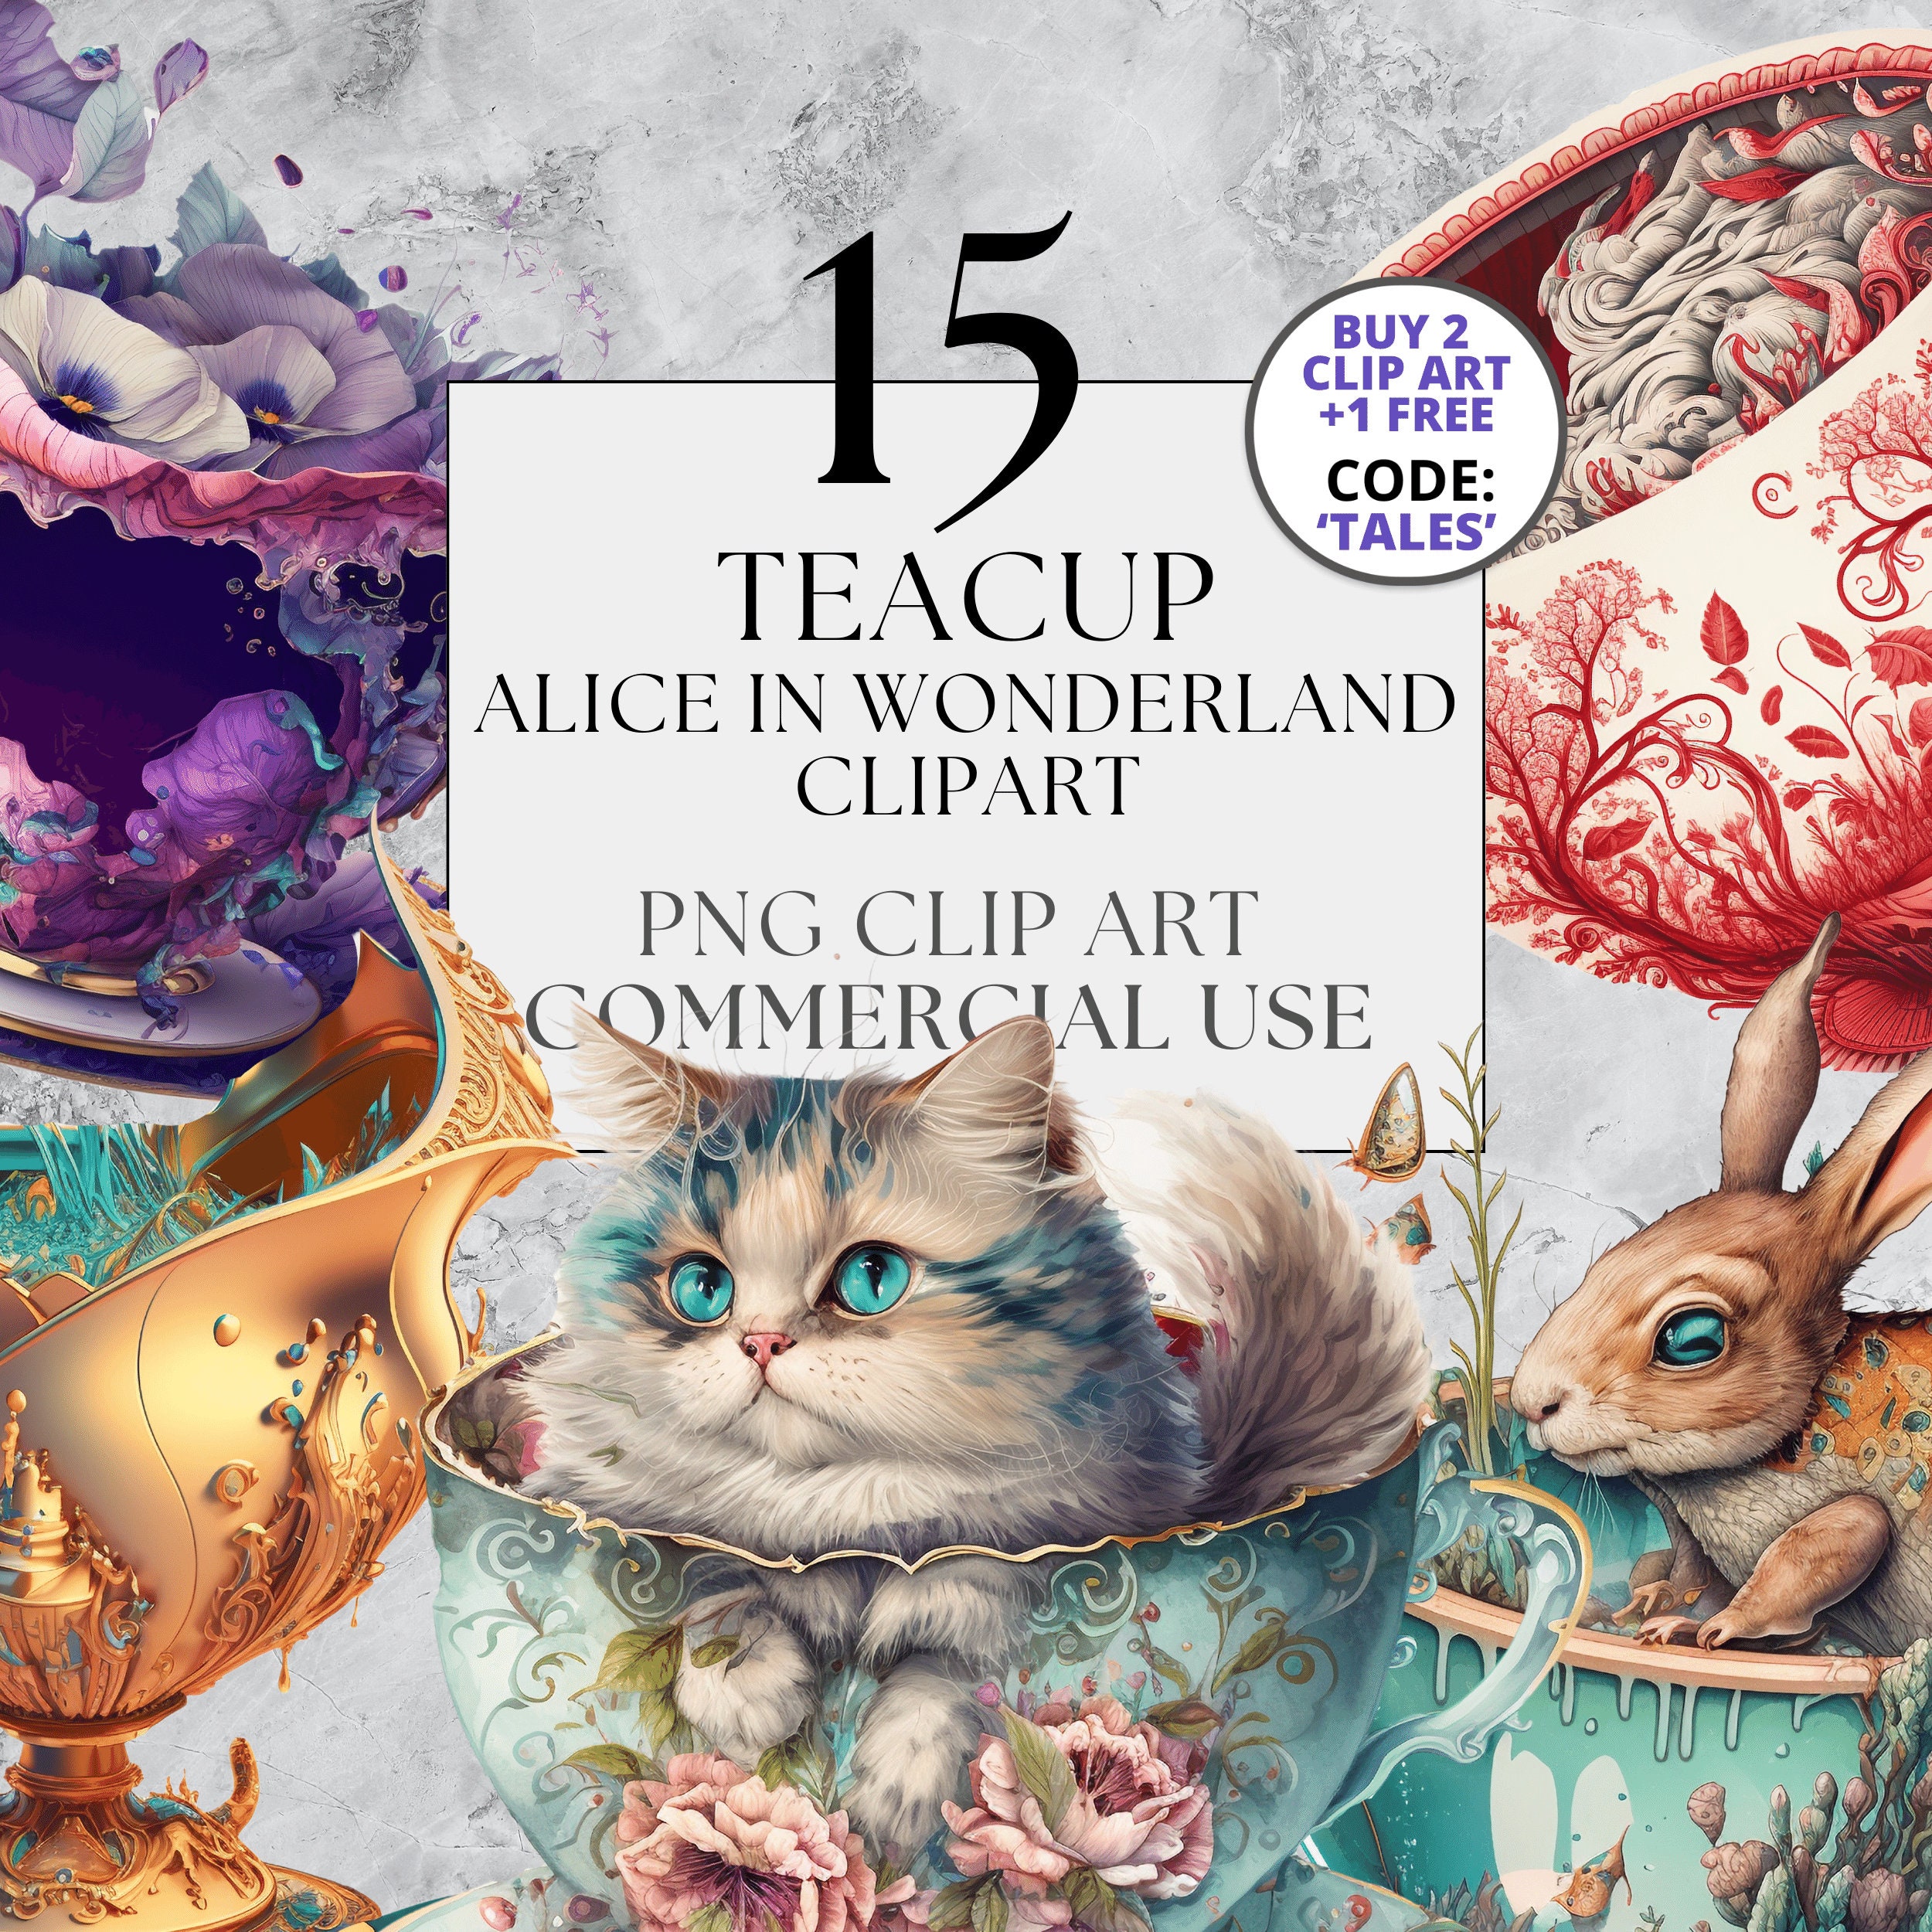  30pcs Vintage Alice in Wonderland Invitations for Mad